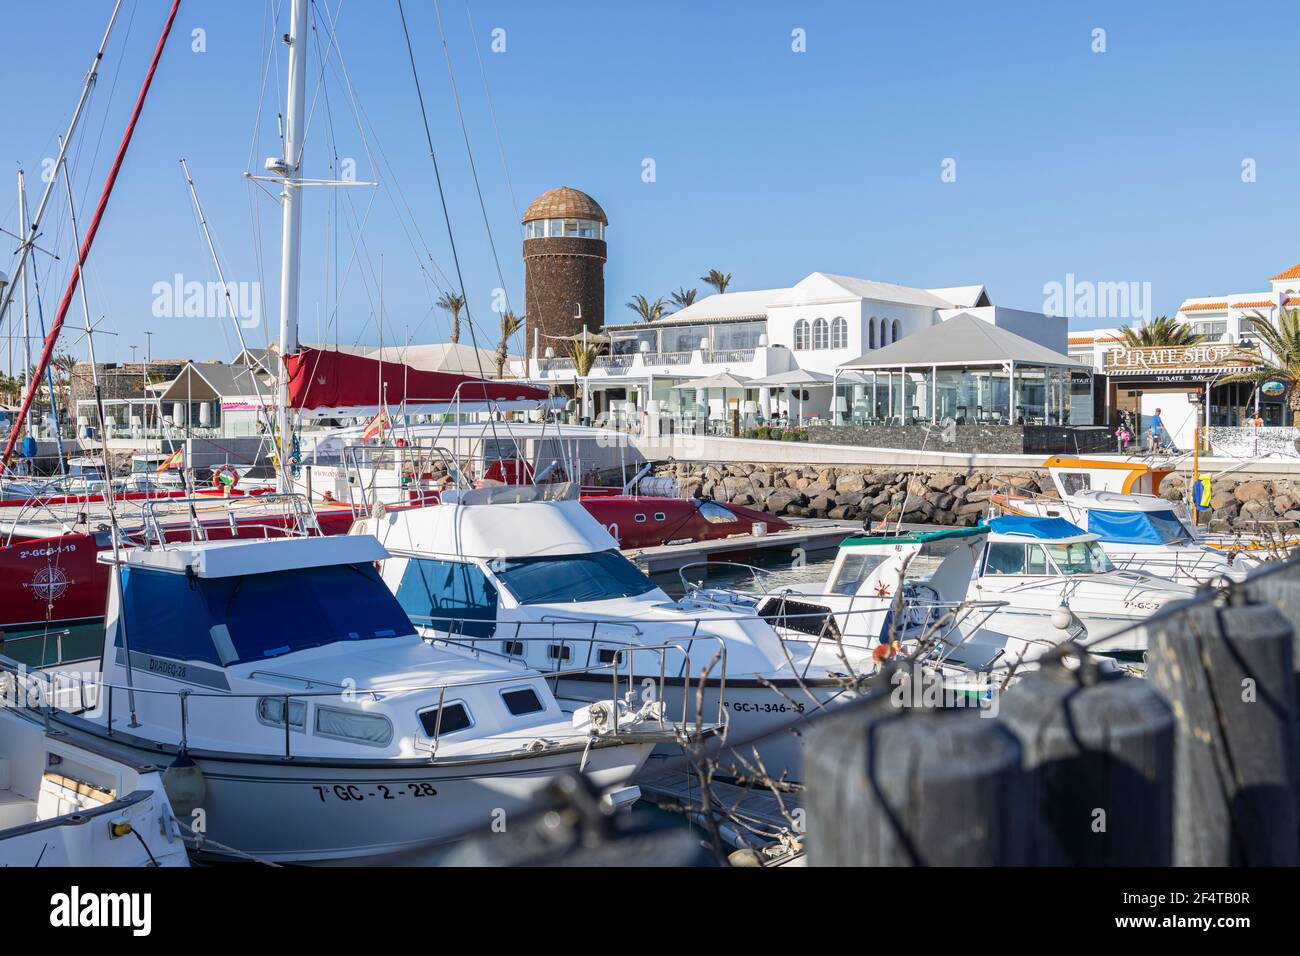 Yachts and boats moored in the marina at Caleta de Fuste, Fuerteventura,  Canary Islands, Spain Stock Photo - Alamy